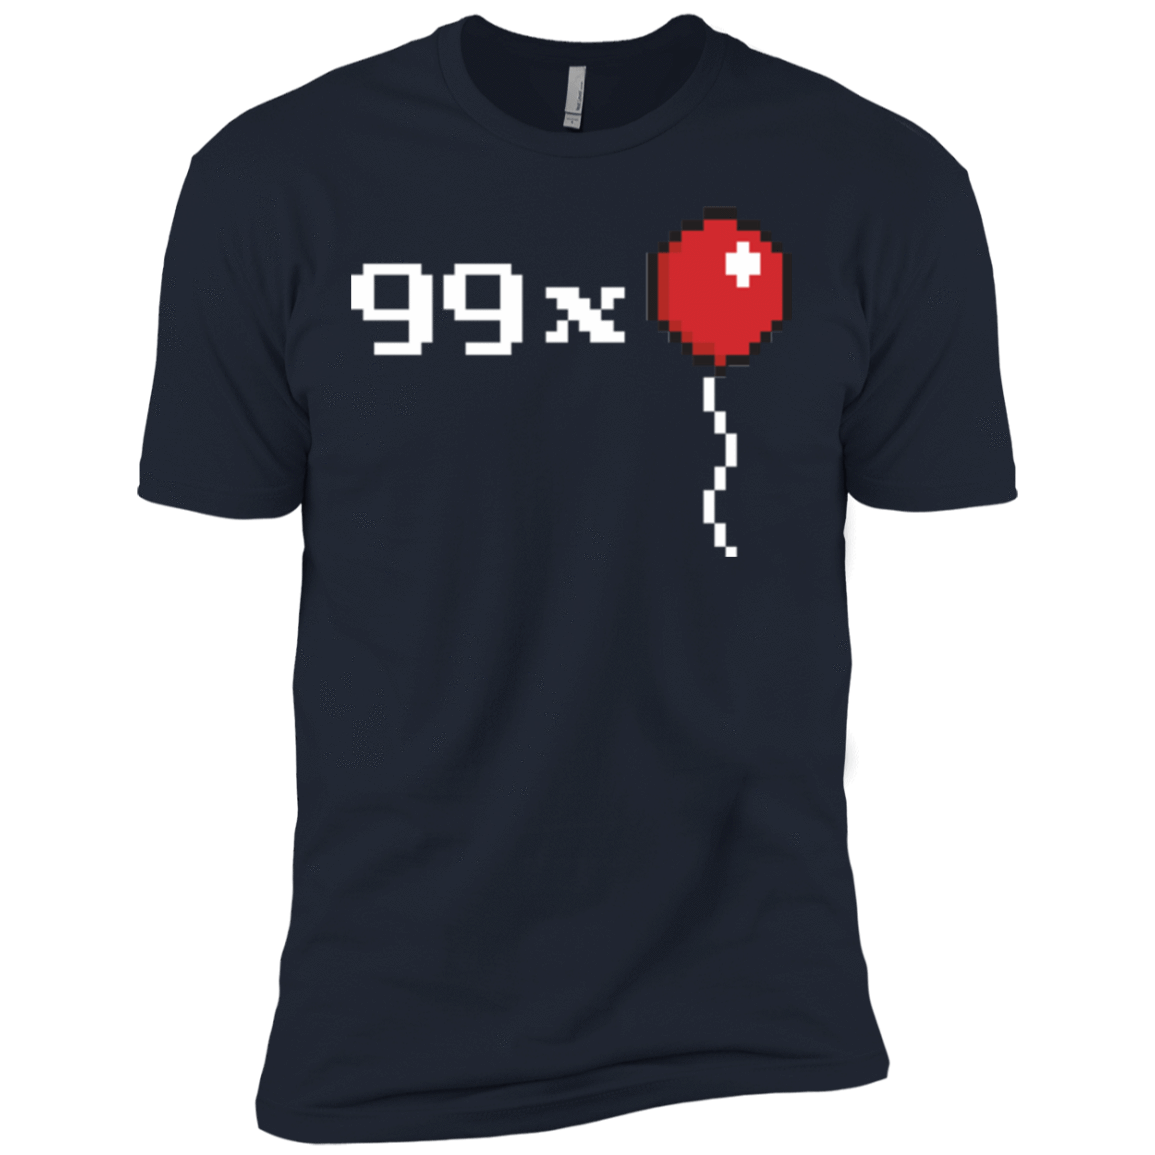 T-Shirts Midnight Navy / X-Small 99x Balloon Men's Premium T-Shirt